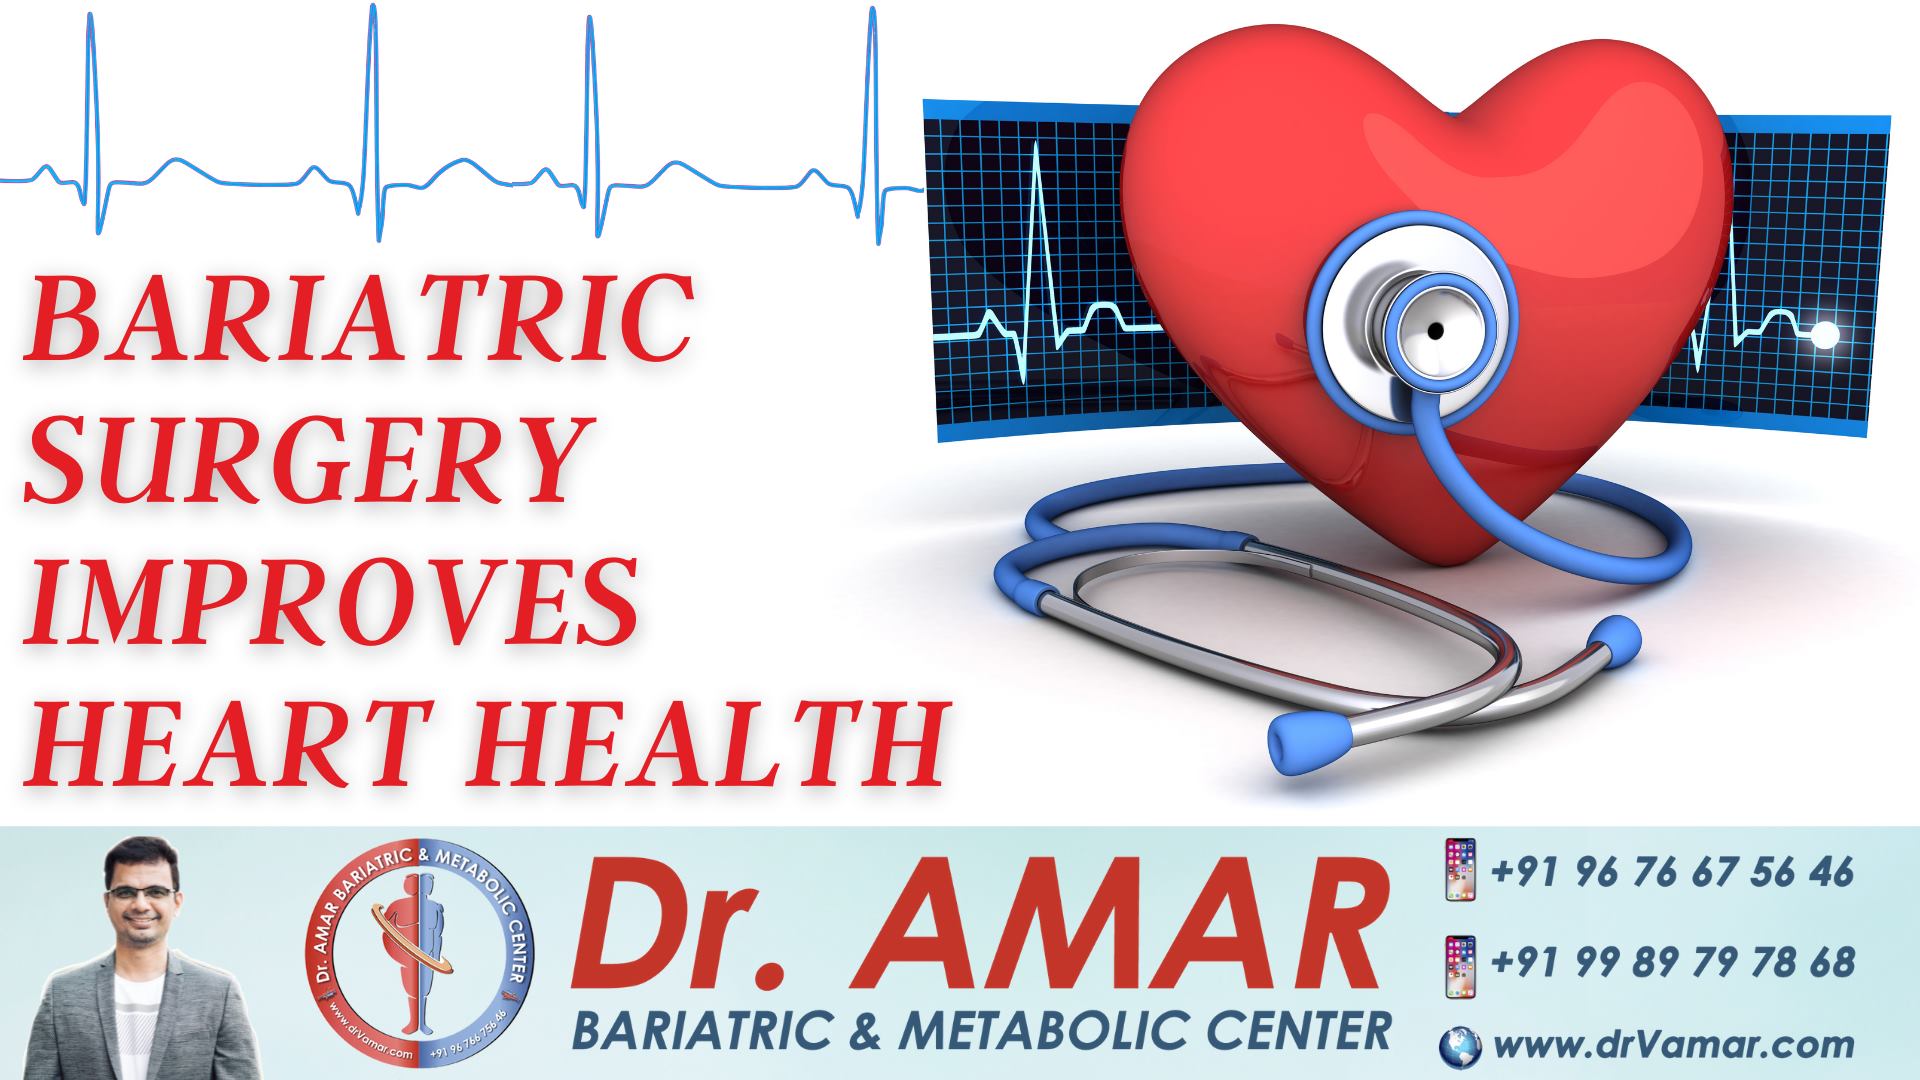 Bariatric surgery improves heart health